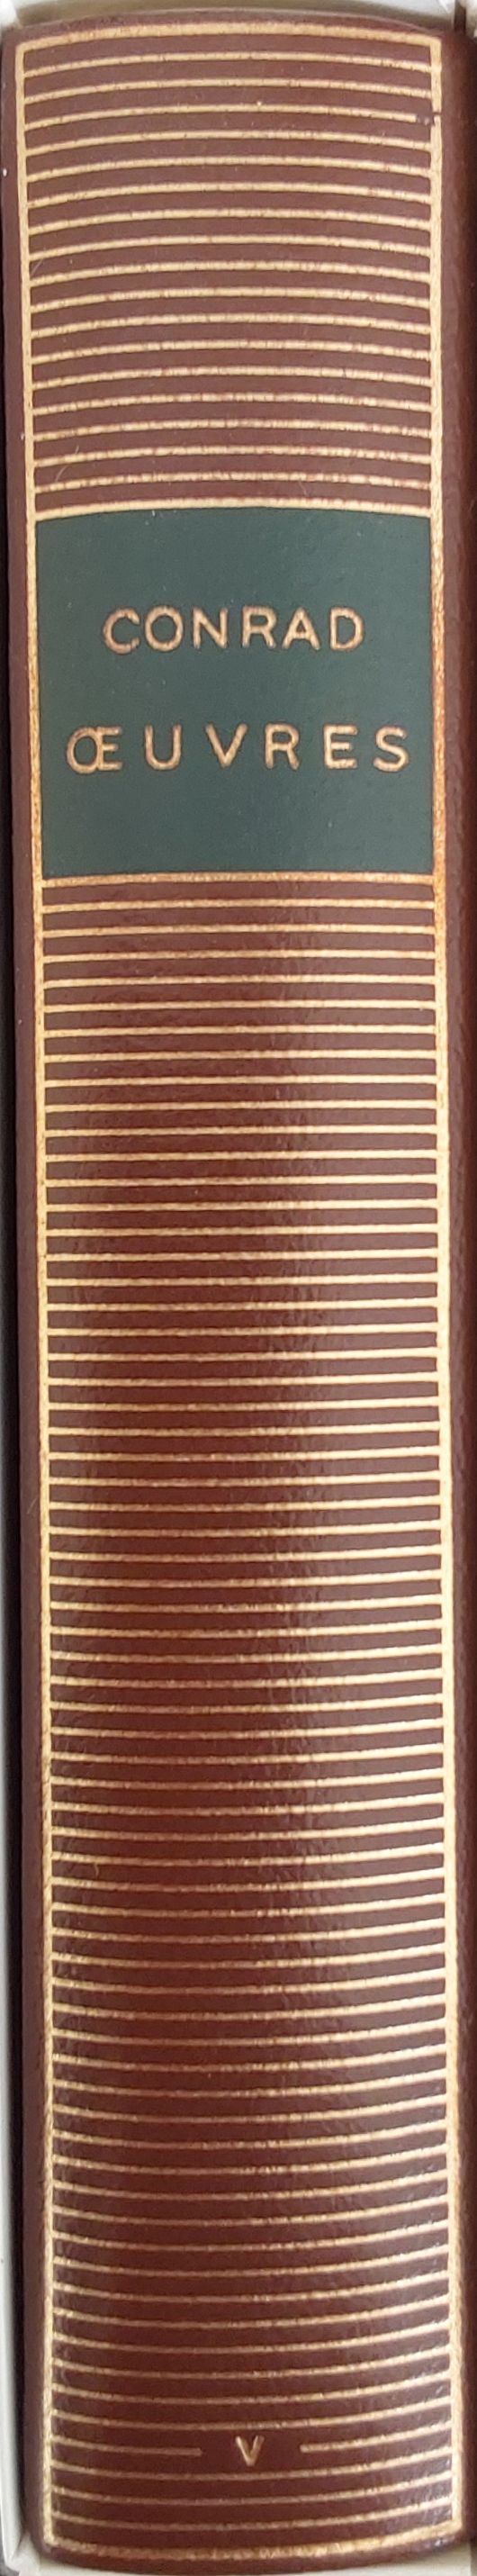 Volume 384 de Joseph Conrad dans la Bibliothèque de la Pléiade.